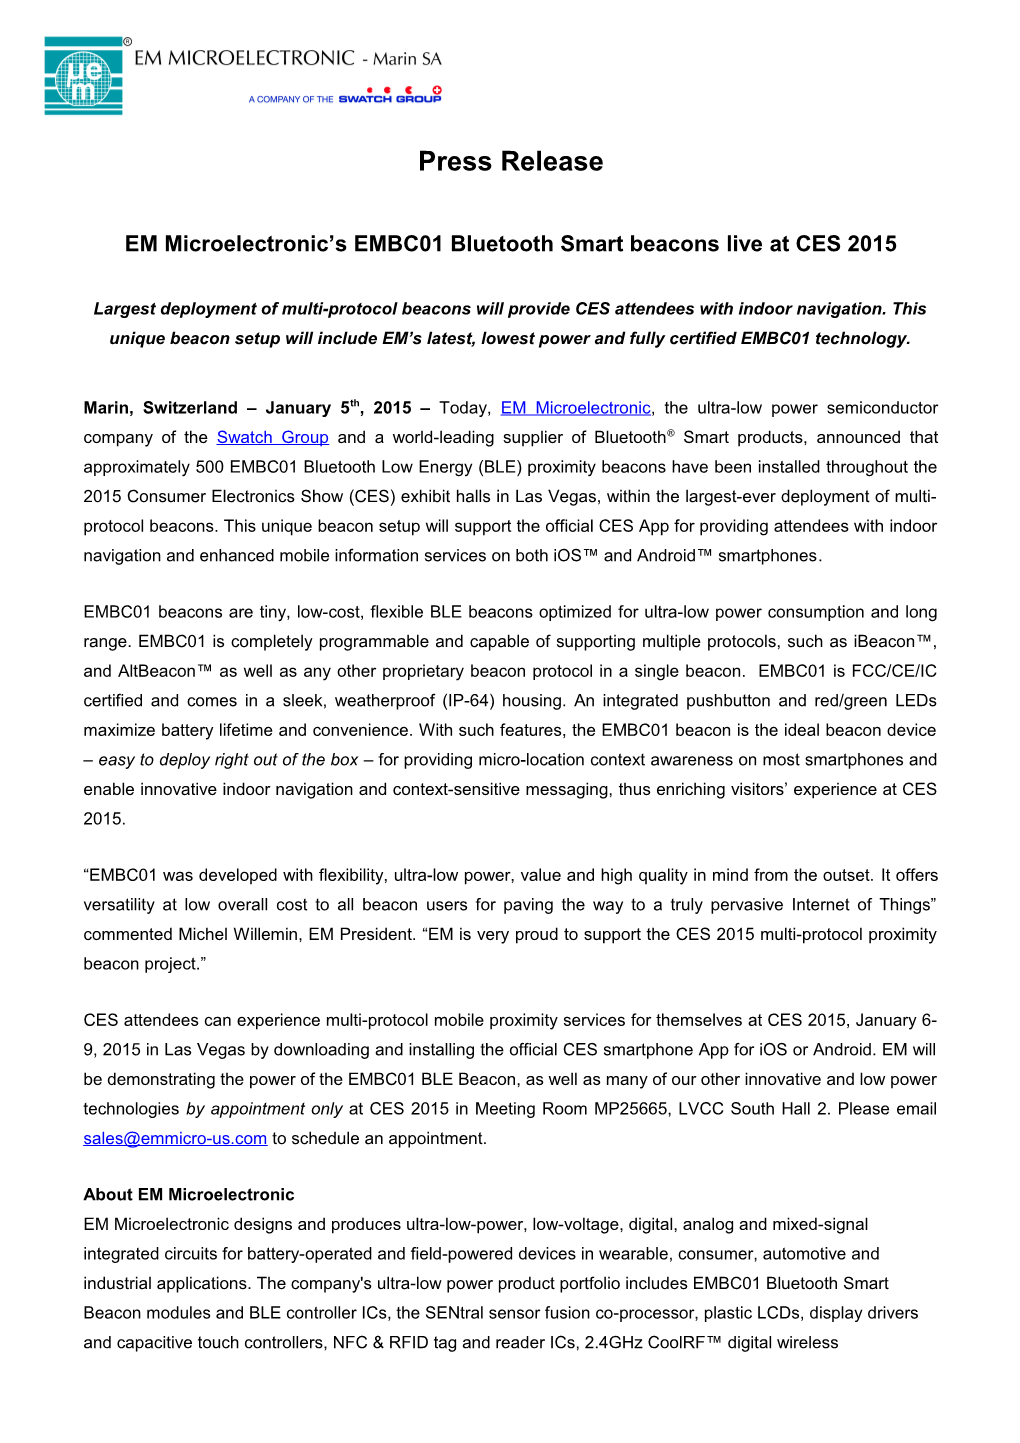 EM Microelectronic S EMBC01 Bluetooth Smart Beacons Liveat CES 2015